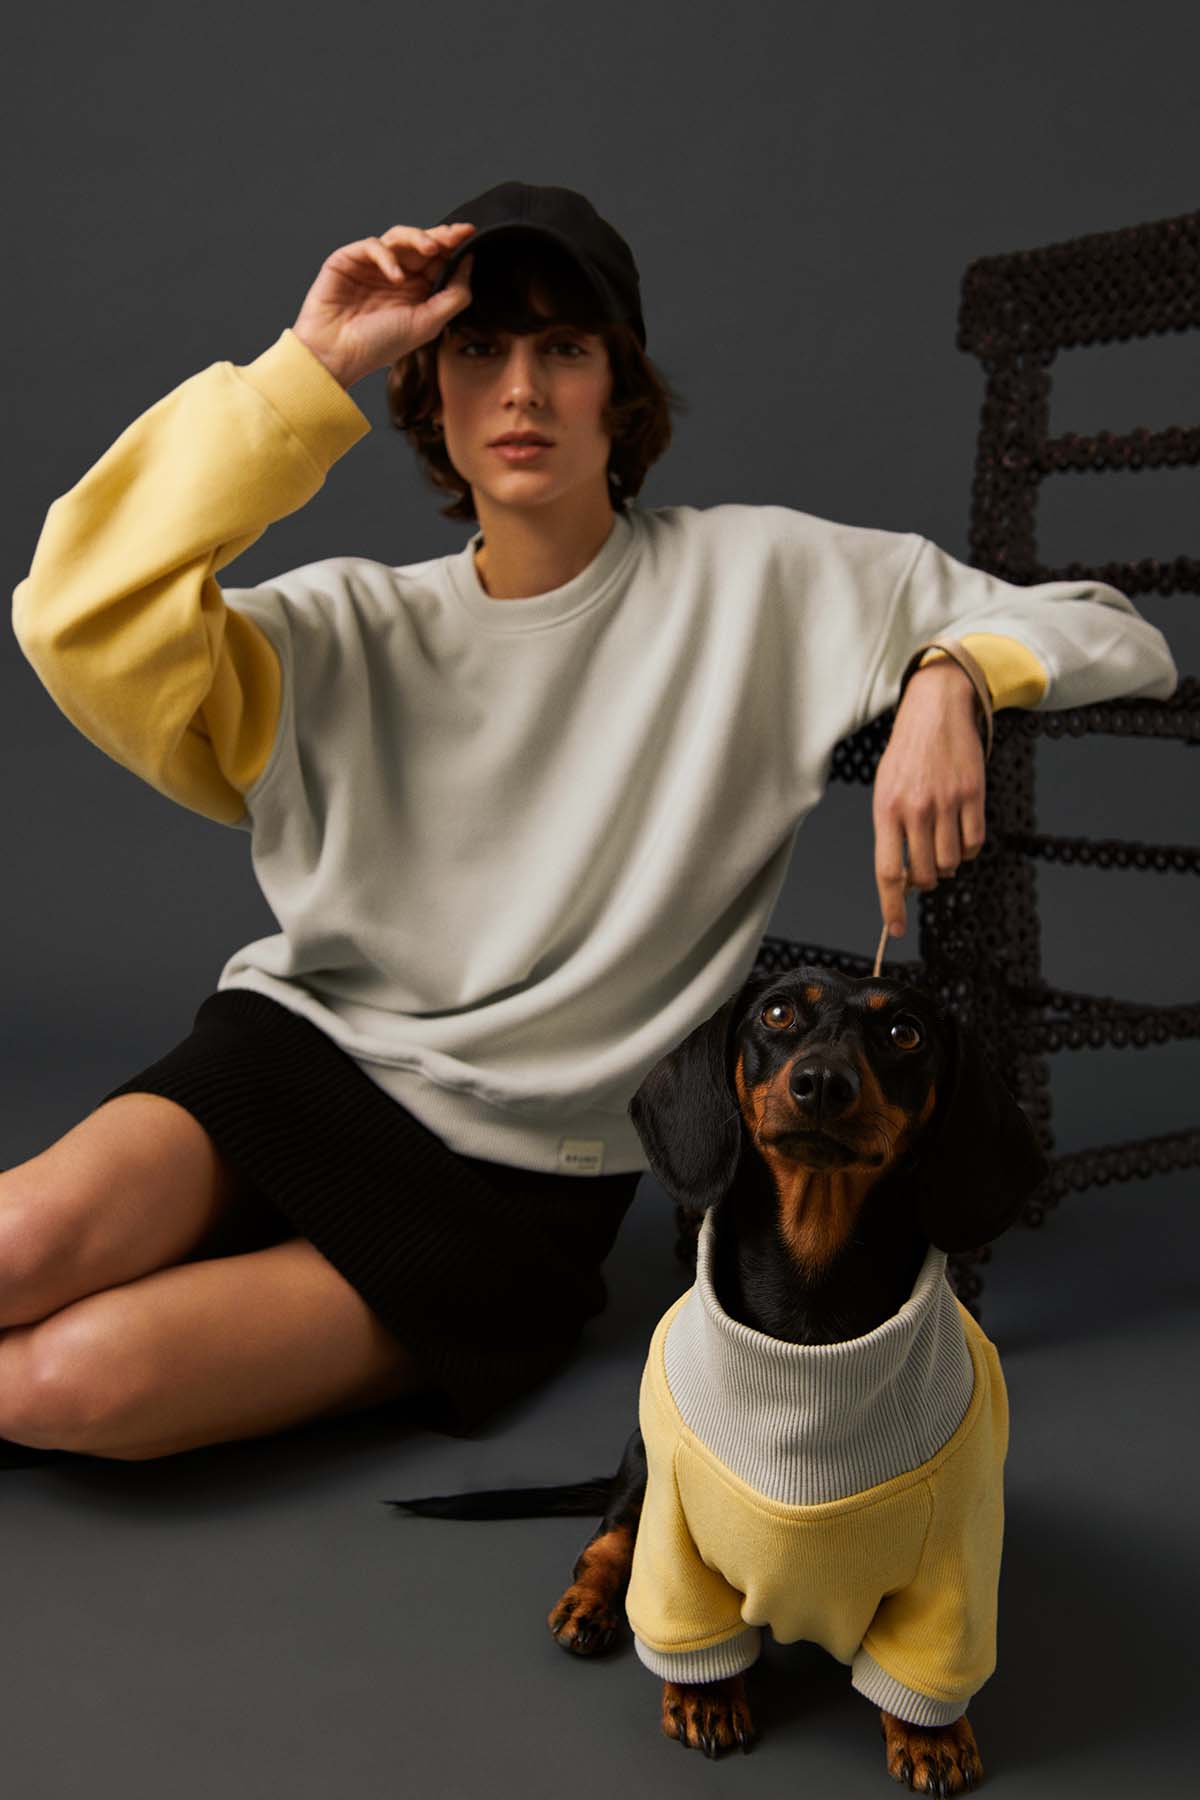 Köpek Sweatshirt - Soluk Sarı/Taş Grisi - Bruno Society